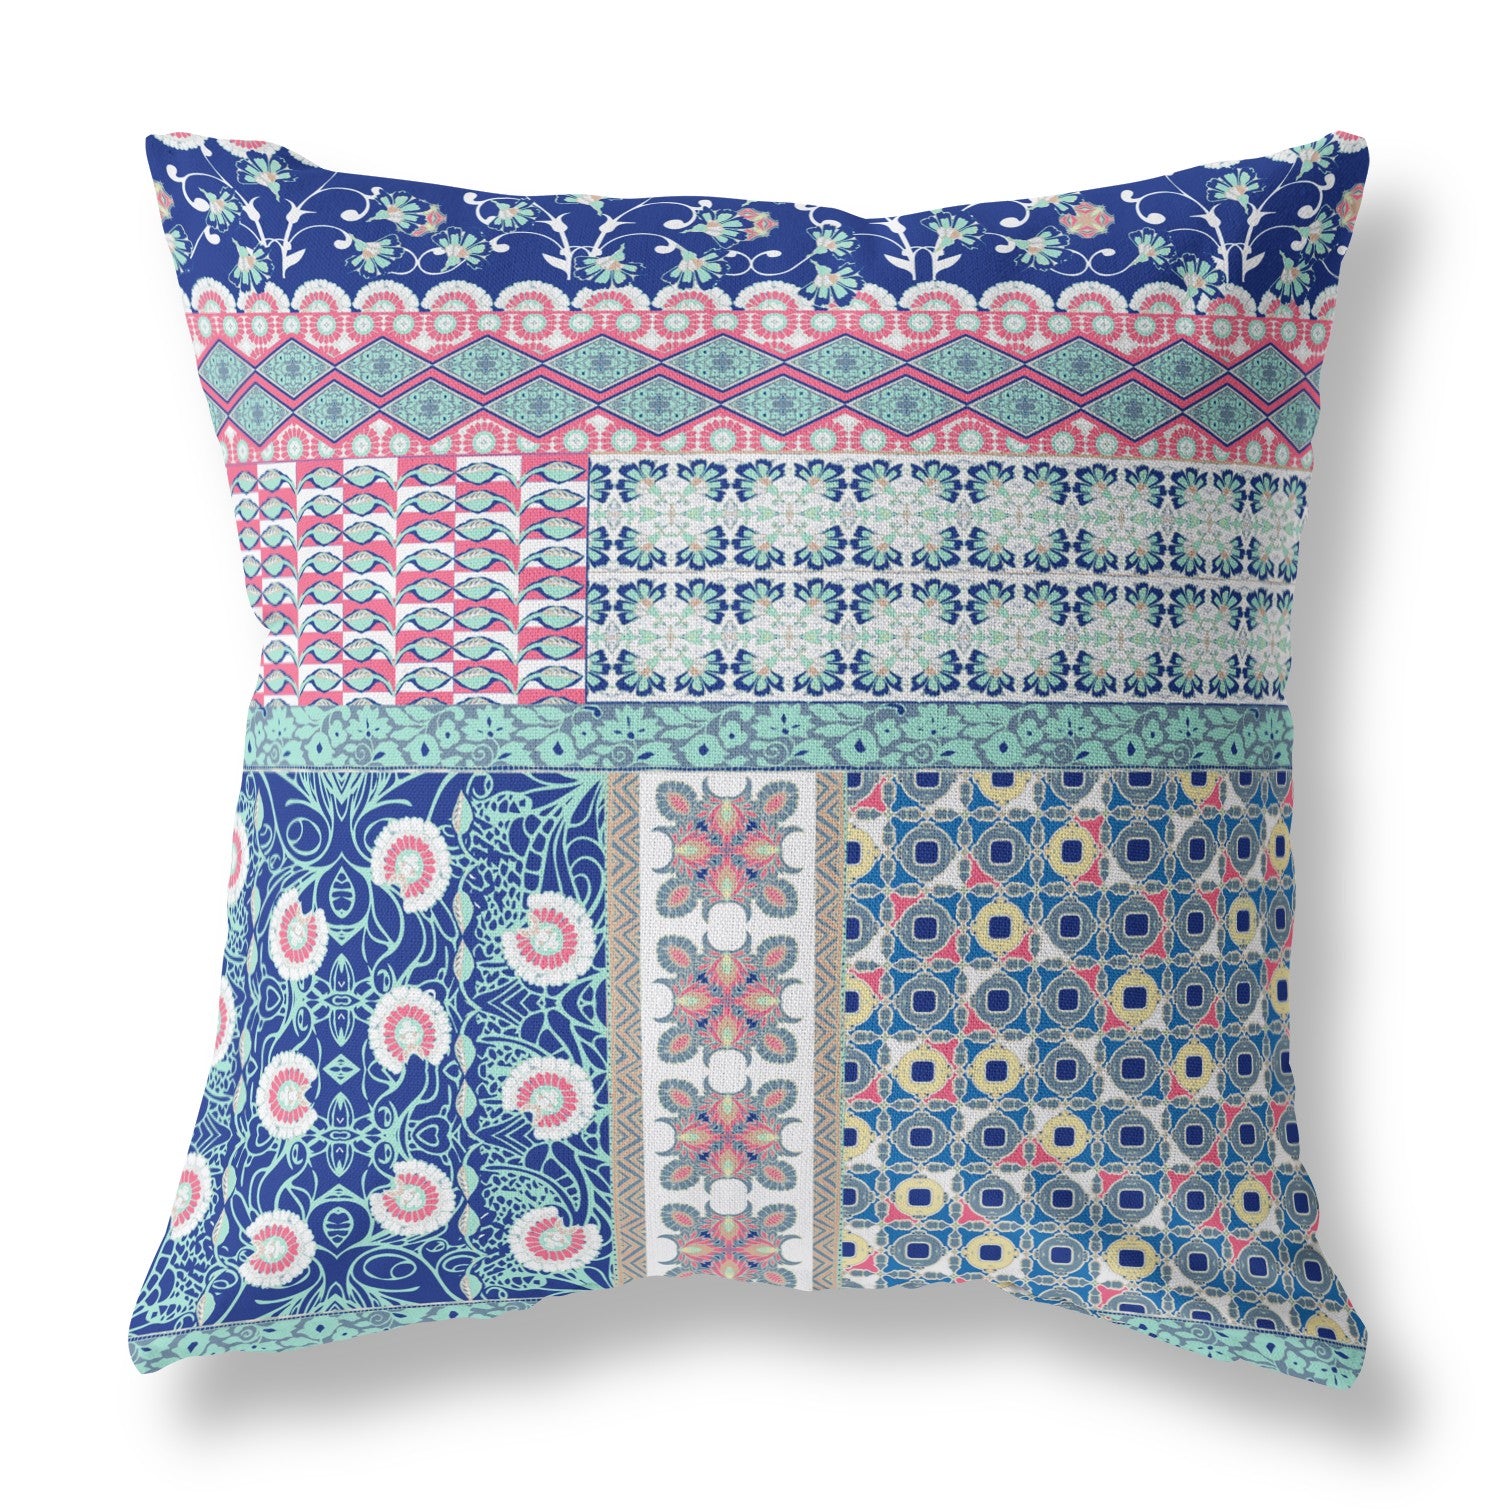 20” Blue Pink Patch Indoor Outdoor Zippered Throw Pillow